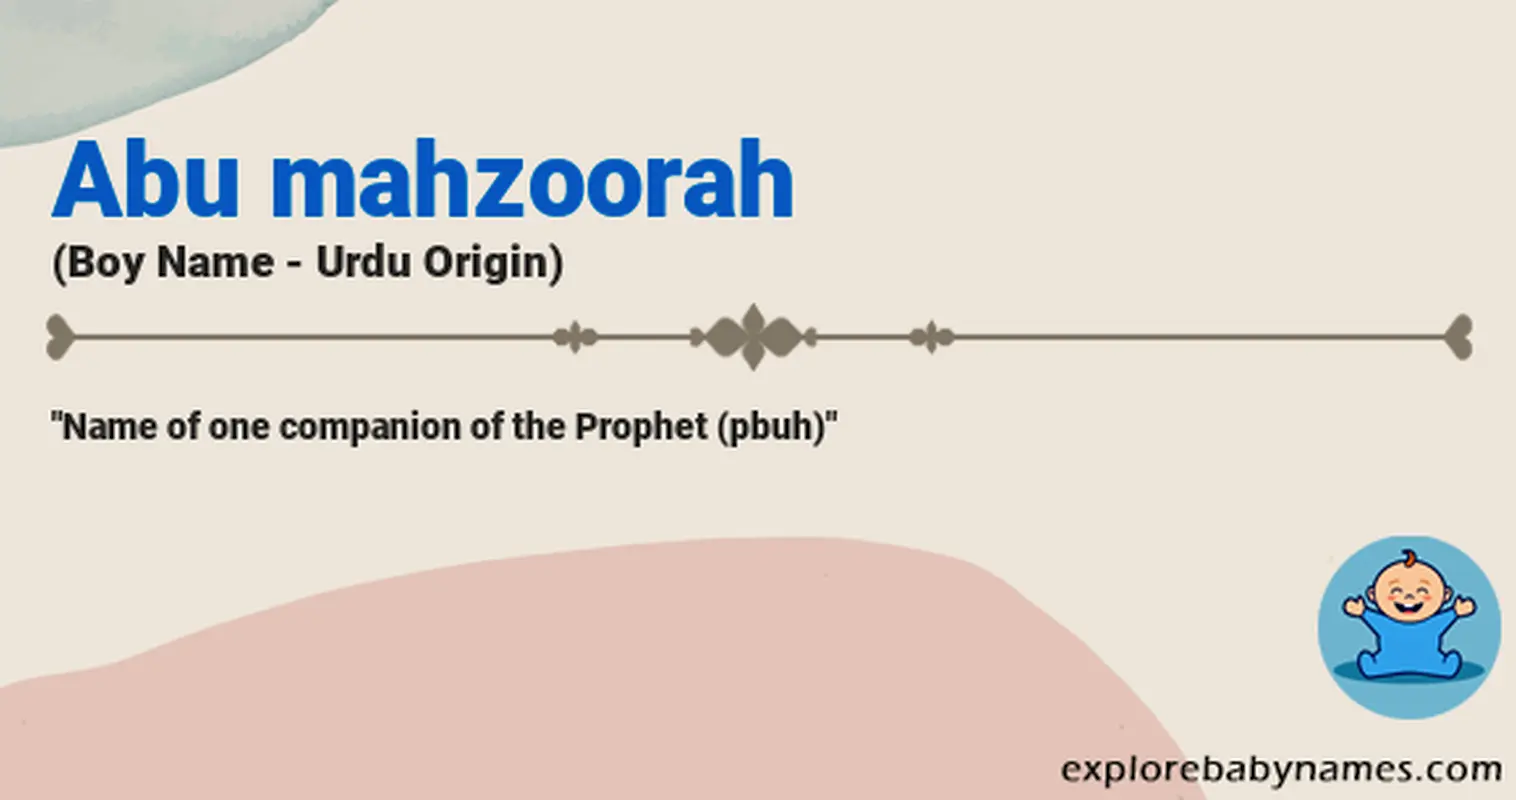 Meaning of Abu mahzoorah